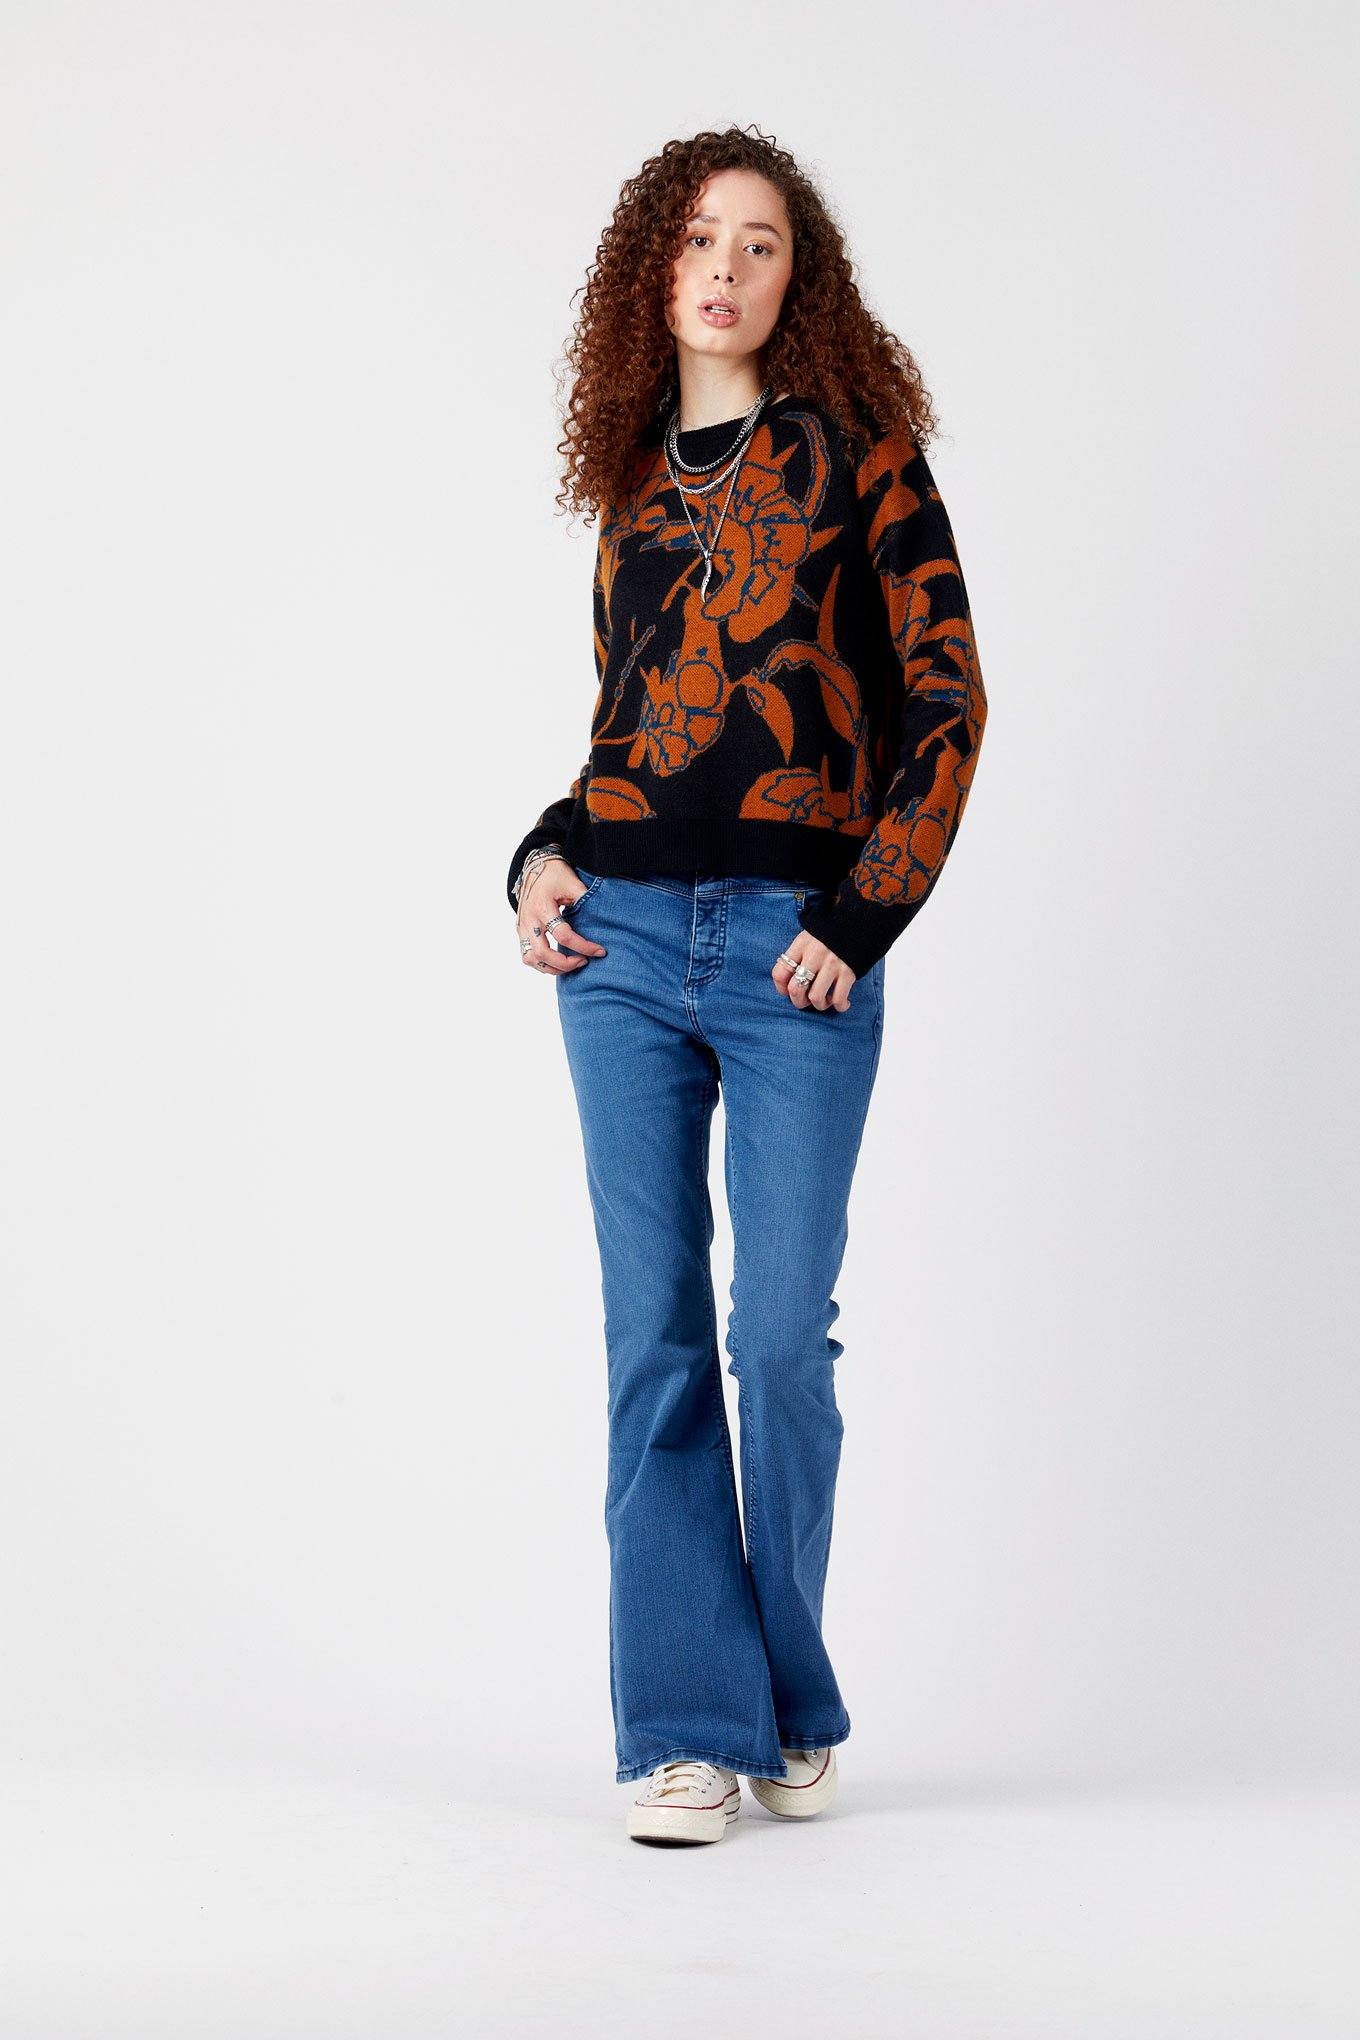 MAVIS Azure - GOTS Organic Cotton Jeans by Flax & Loom, 27 / Long